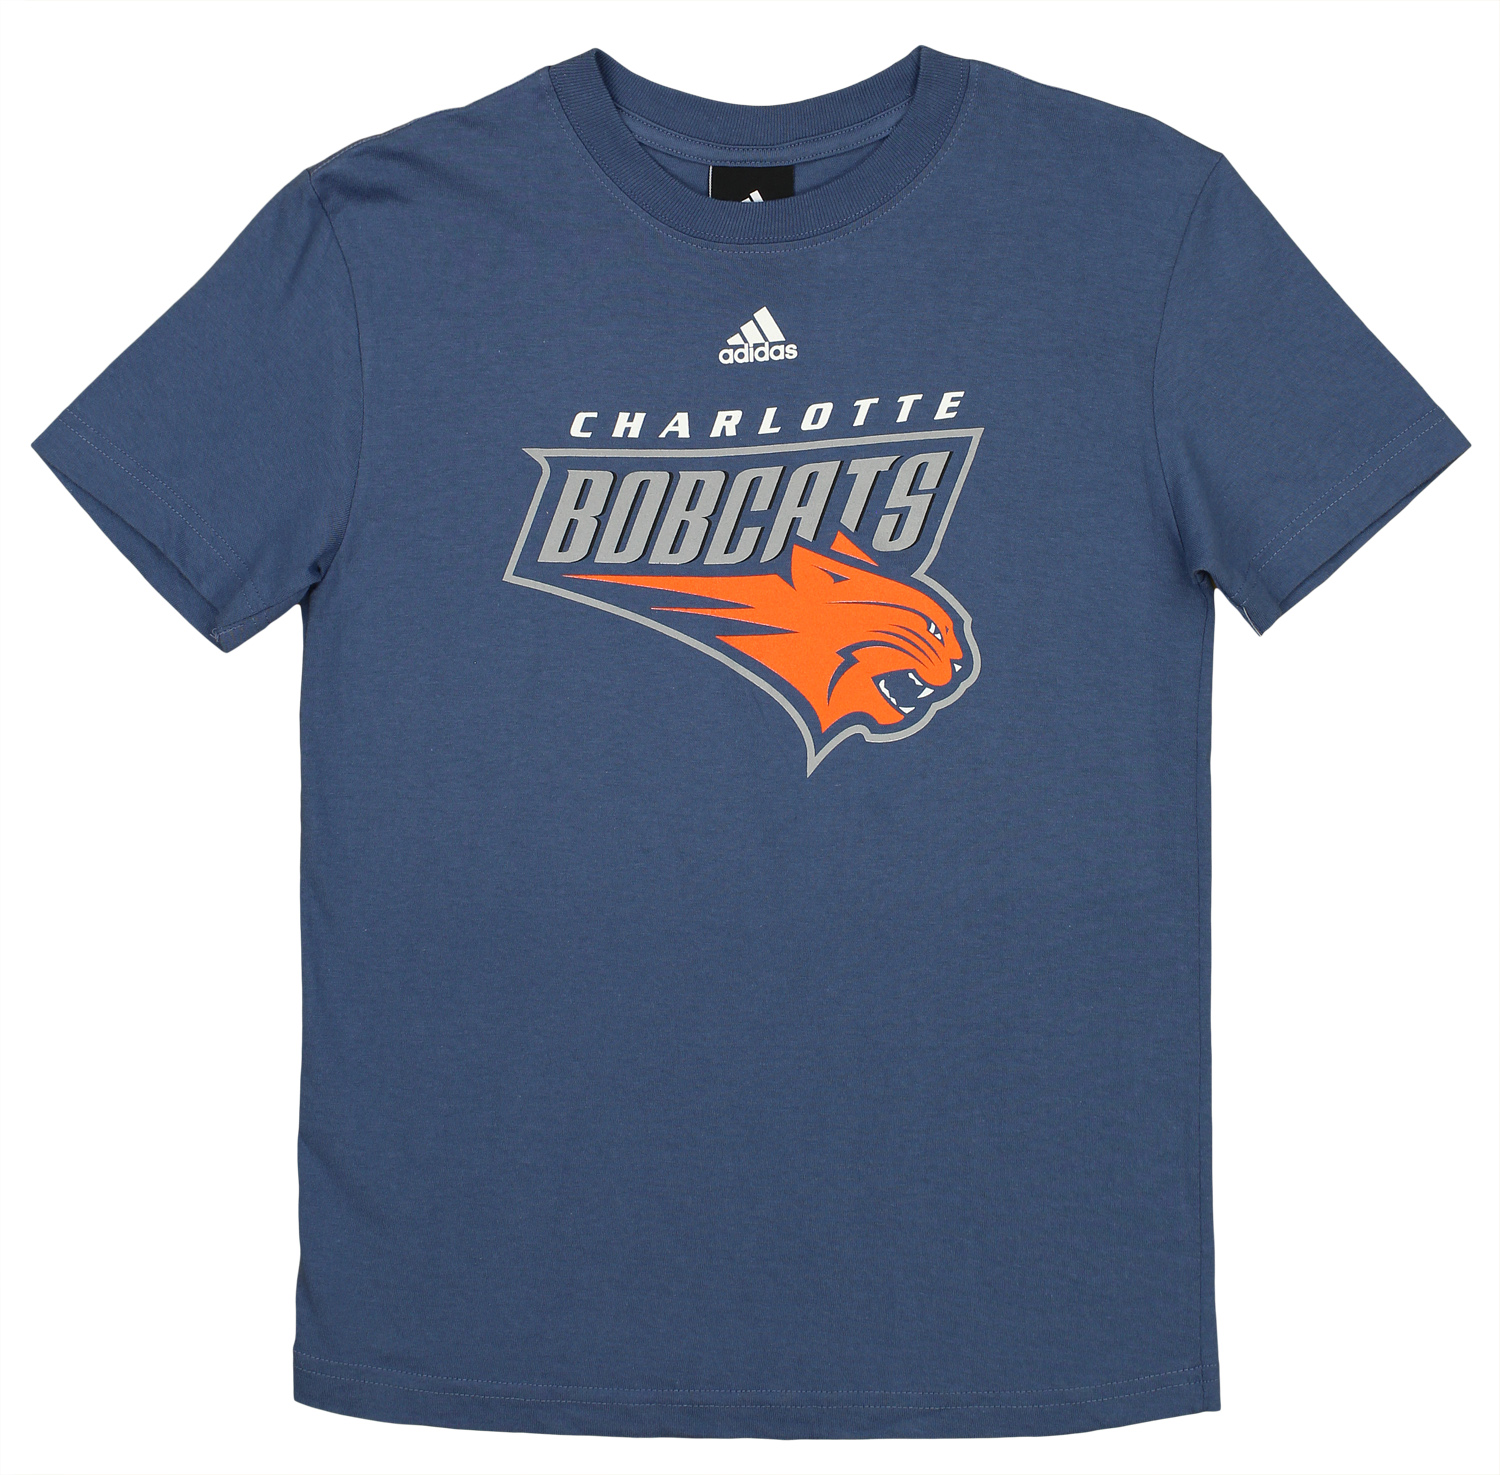 Adidas NBA Youth Charlotte Bobcats Team Logo Tee Shirt | eBay